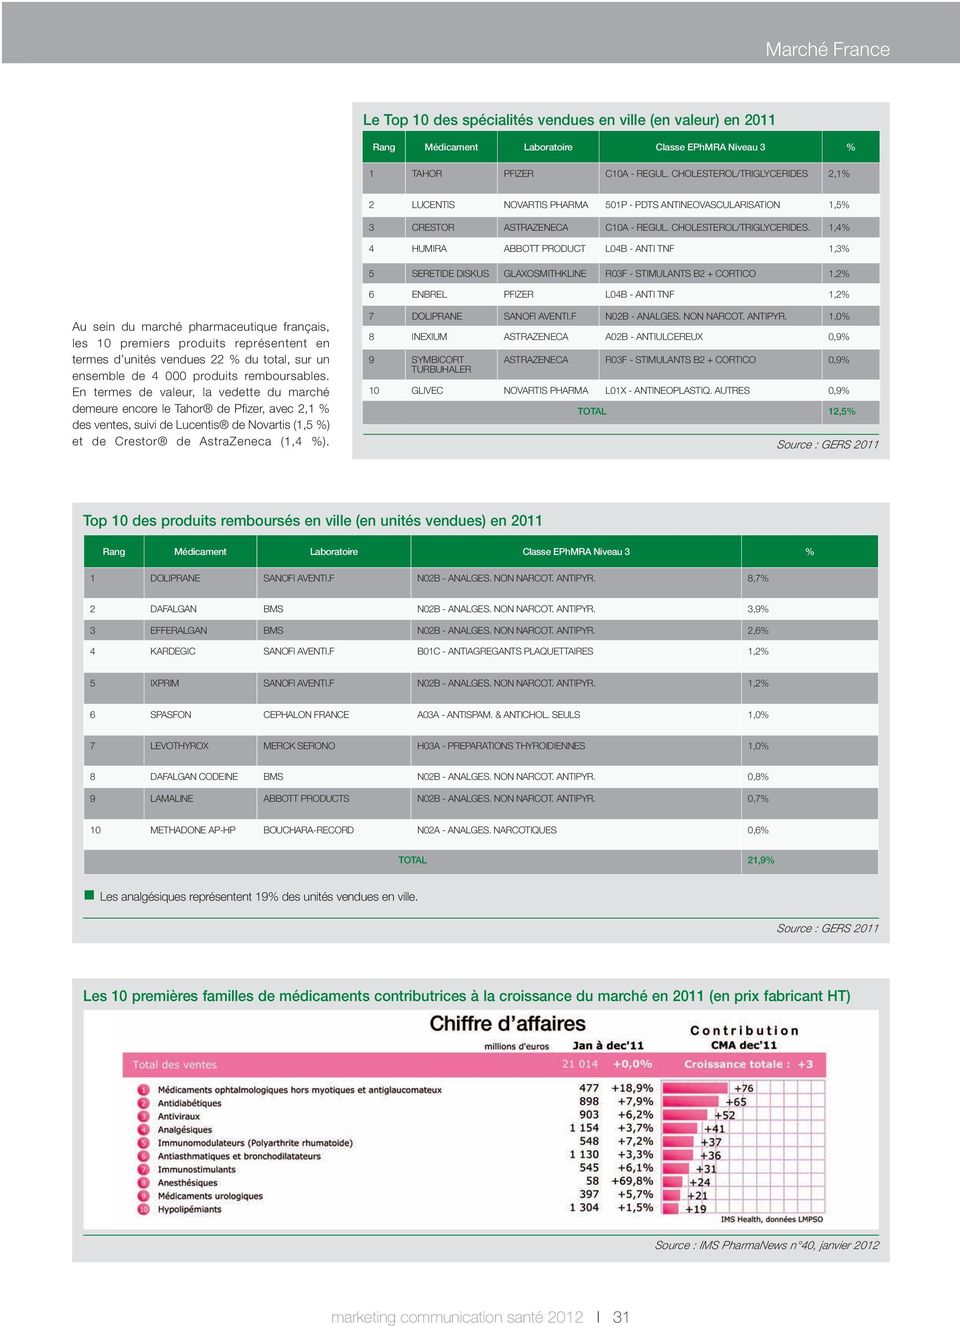 1,4% 4 HUMIRA ABBOTT PRODUCT L04B - ANTI TNF 1,3% 5 SERETIDE DISKUS GLAXOSMITHKLINE R03F - STIMULANTS B2 + CORTICO 1,2% 6 ENBREL PFIZER L04B - ANTI TNF 1,2% Au sein du marché pharmaceutique français,